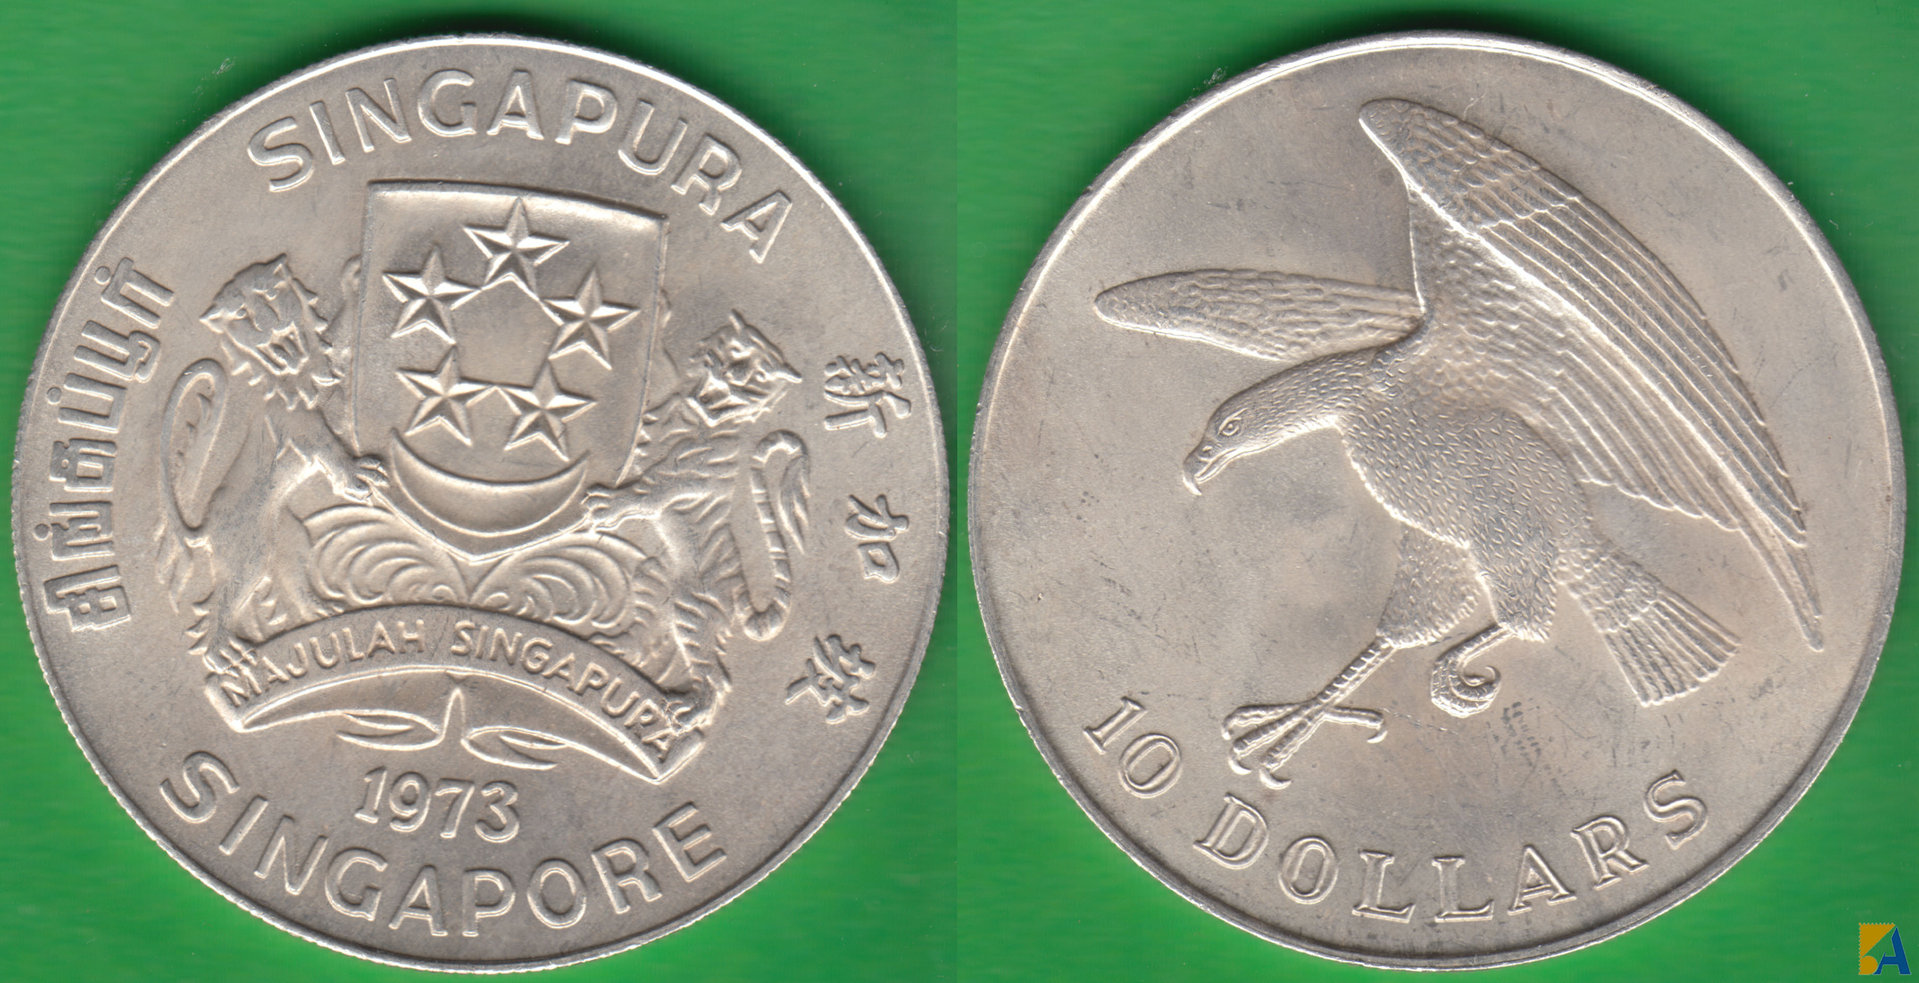 SINGAPUR - SINGAPORE. 10 DOLARES (DOLLARS) DE 1973. PLATA 0.900. (2)